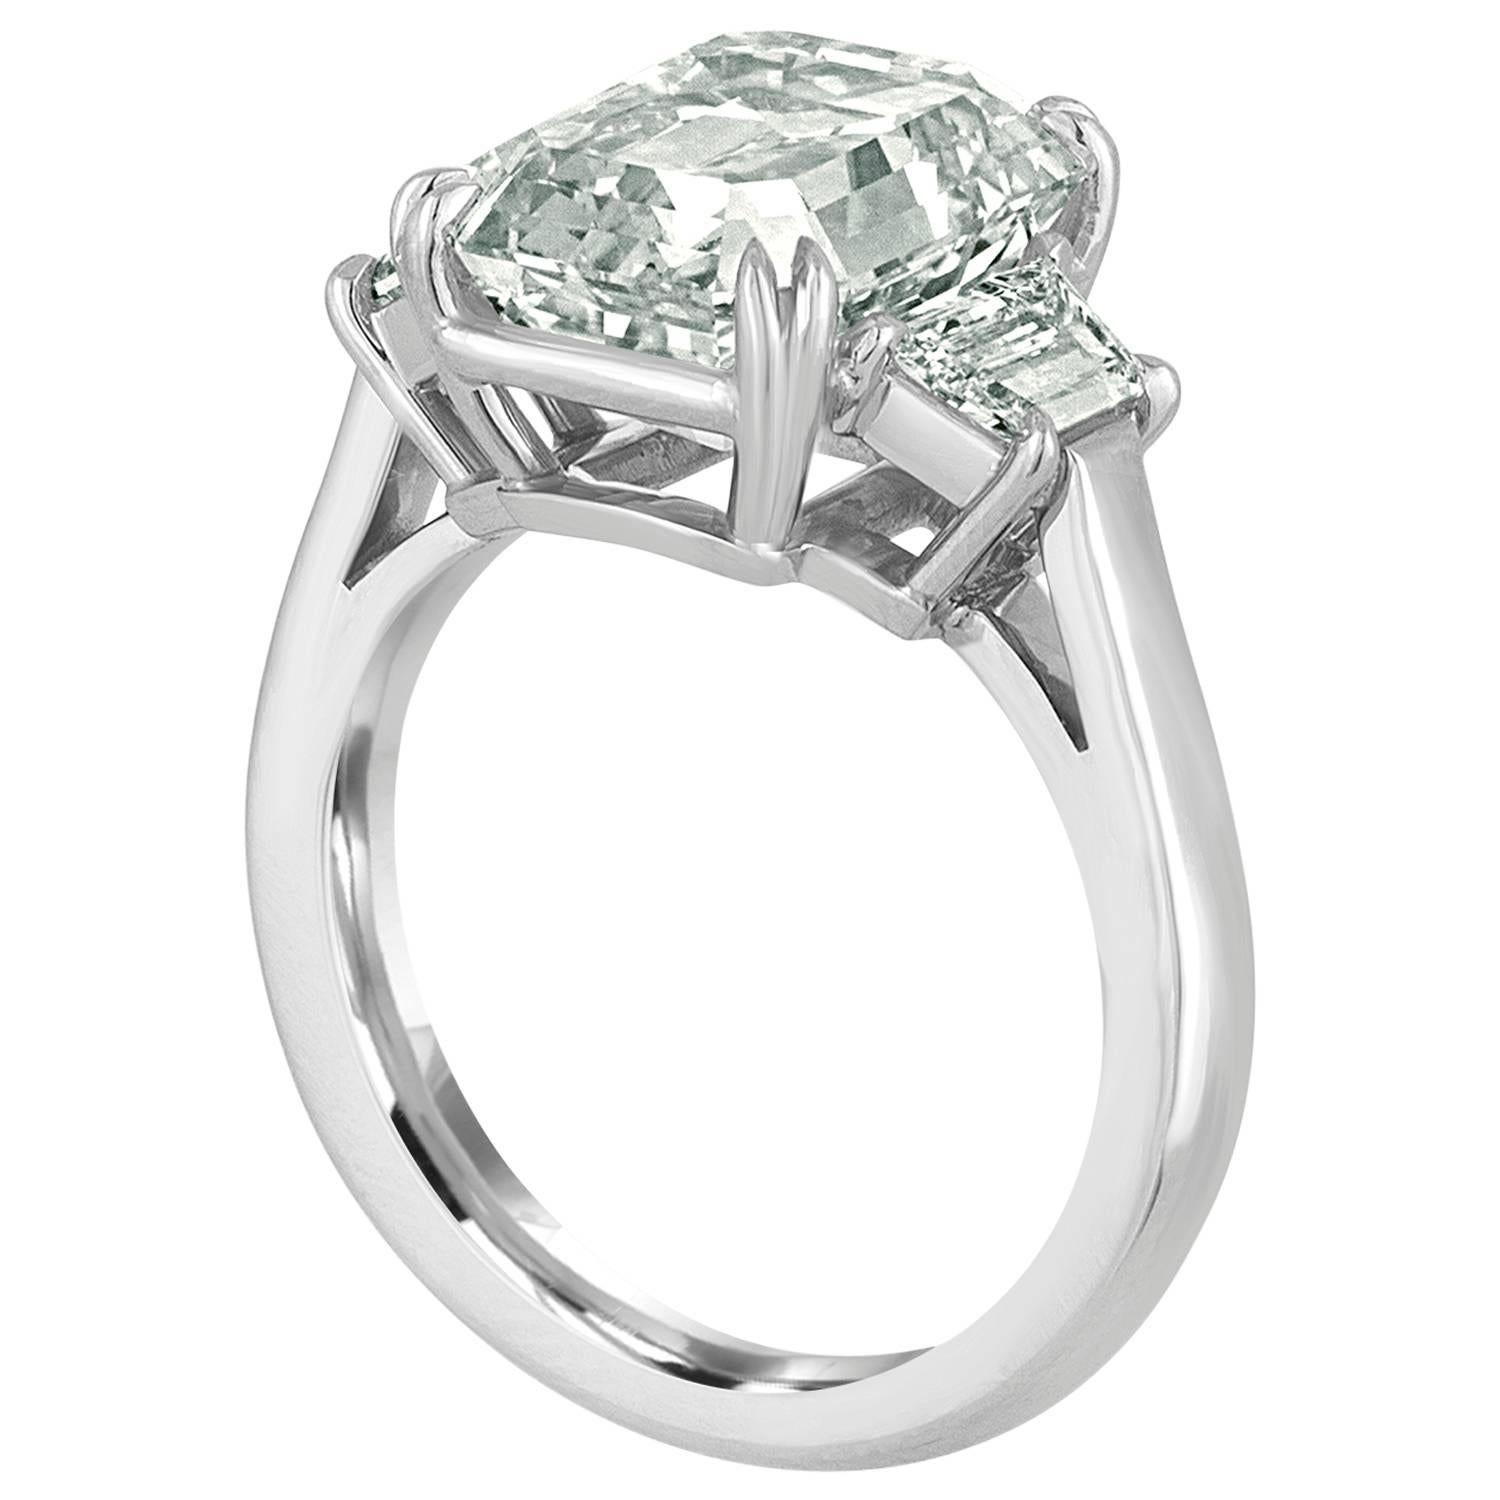 6.02 Carat Emerald Cut Diamond Set in Platinum with Trapezoids